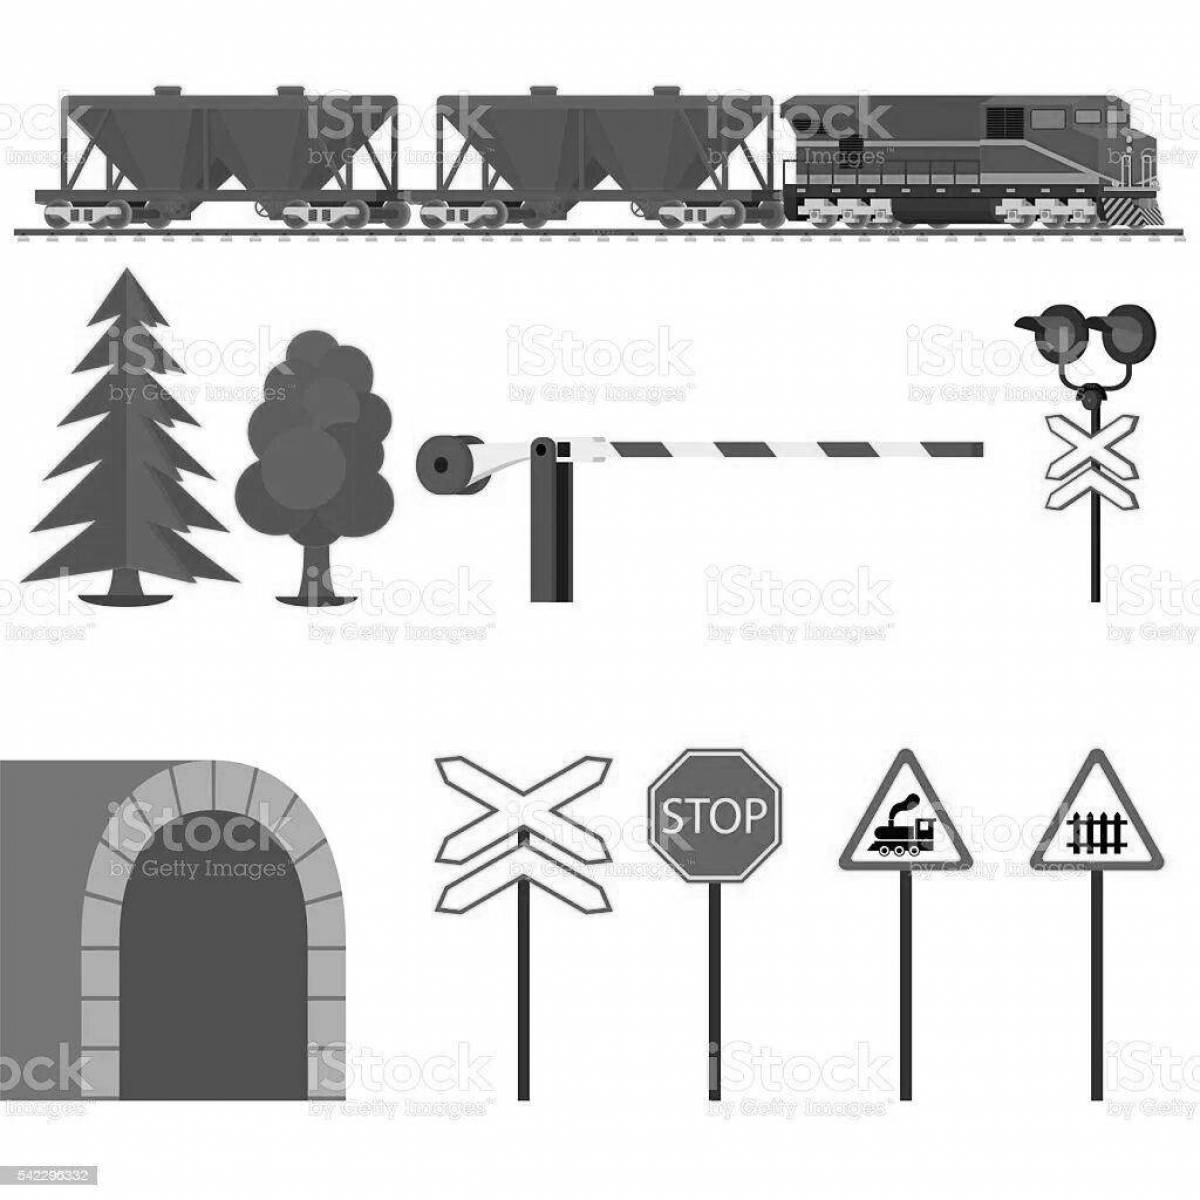 Coloring page happy railroad crossing